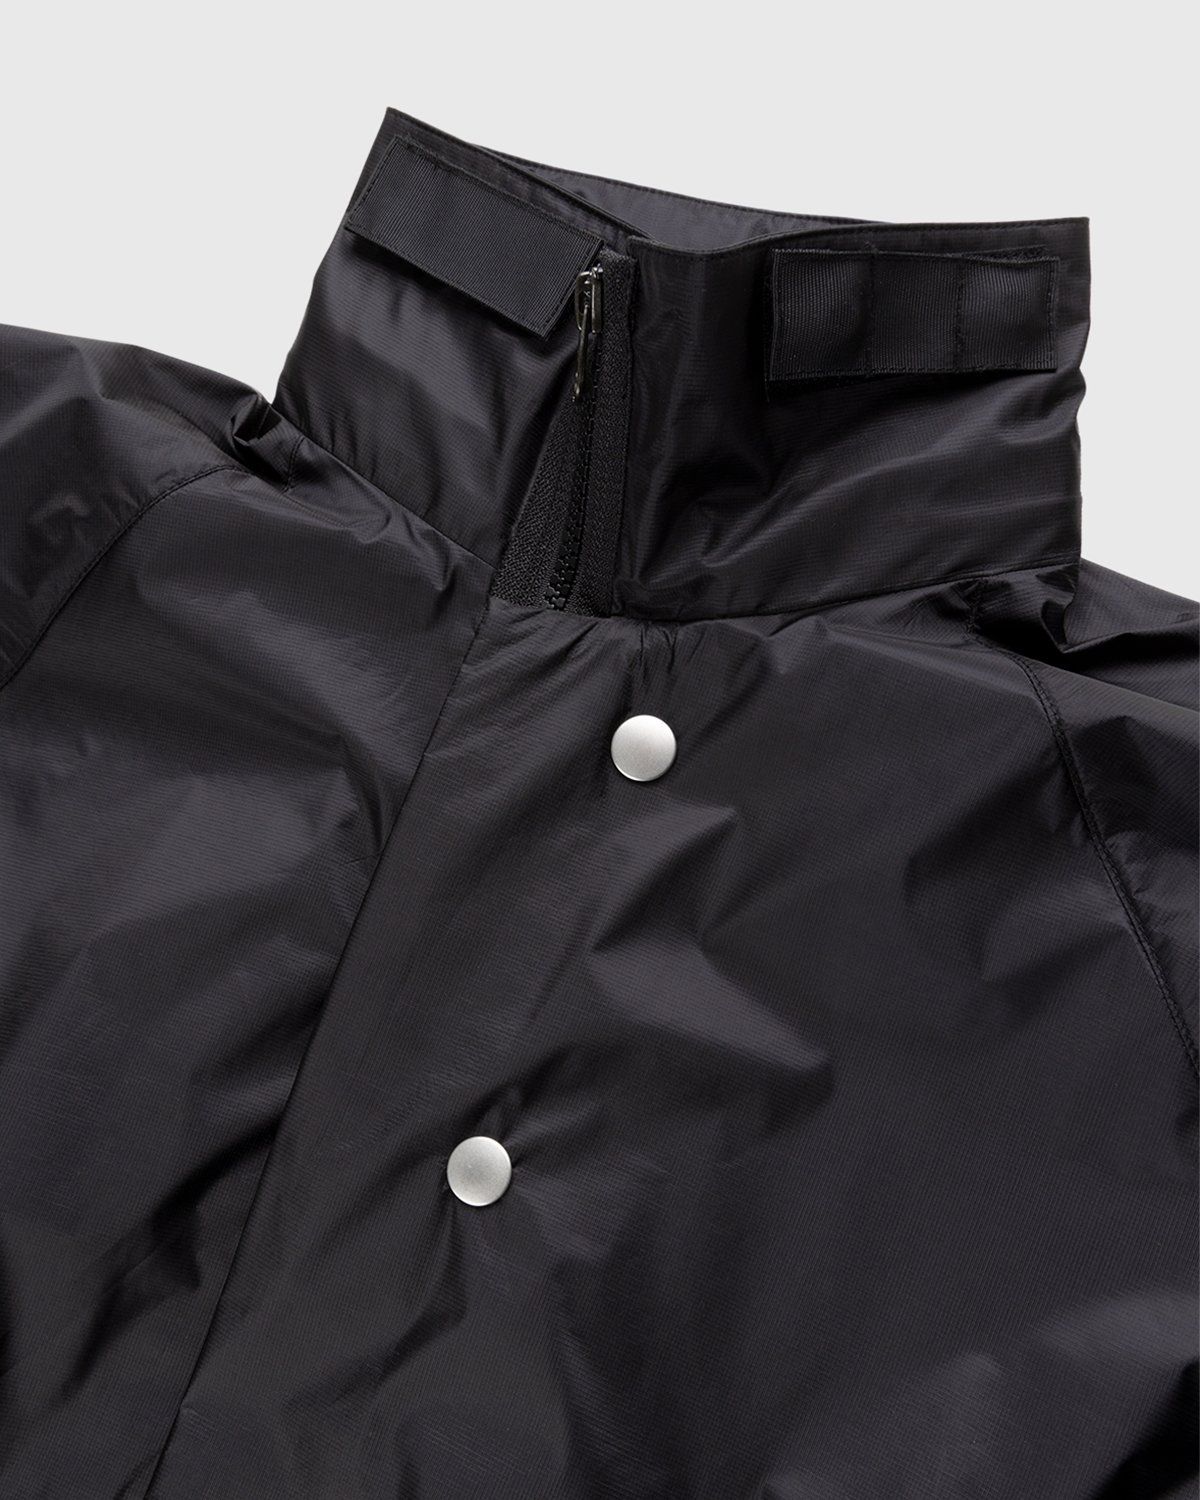 ACRONYM – J95-WS Jacket Black - Outerwear - Black - Image 4